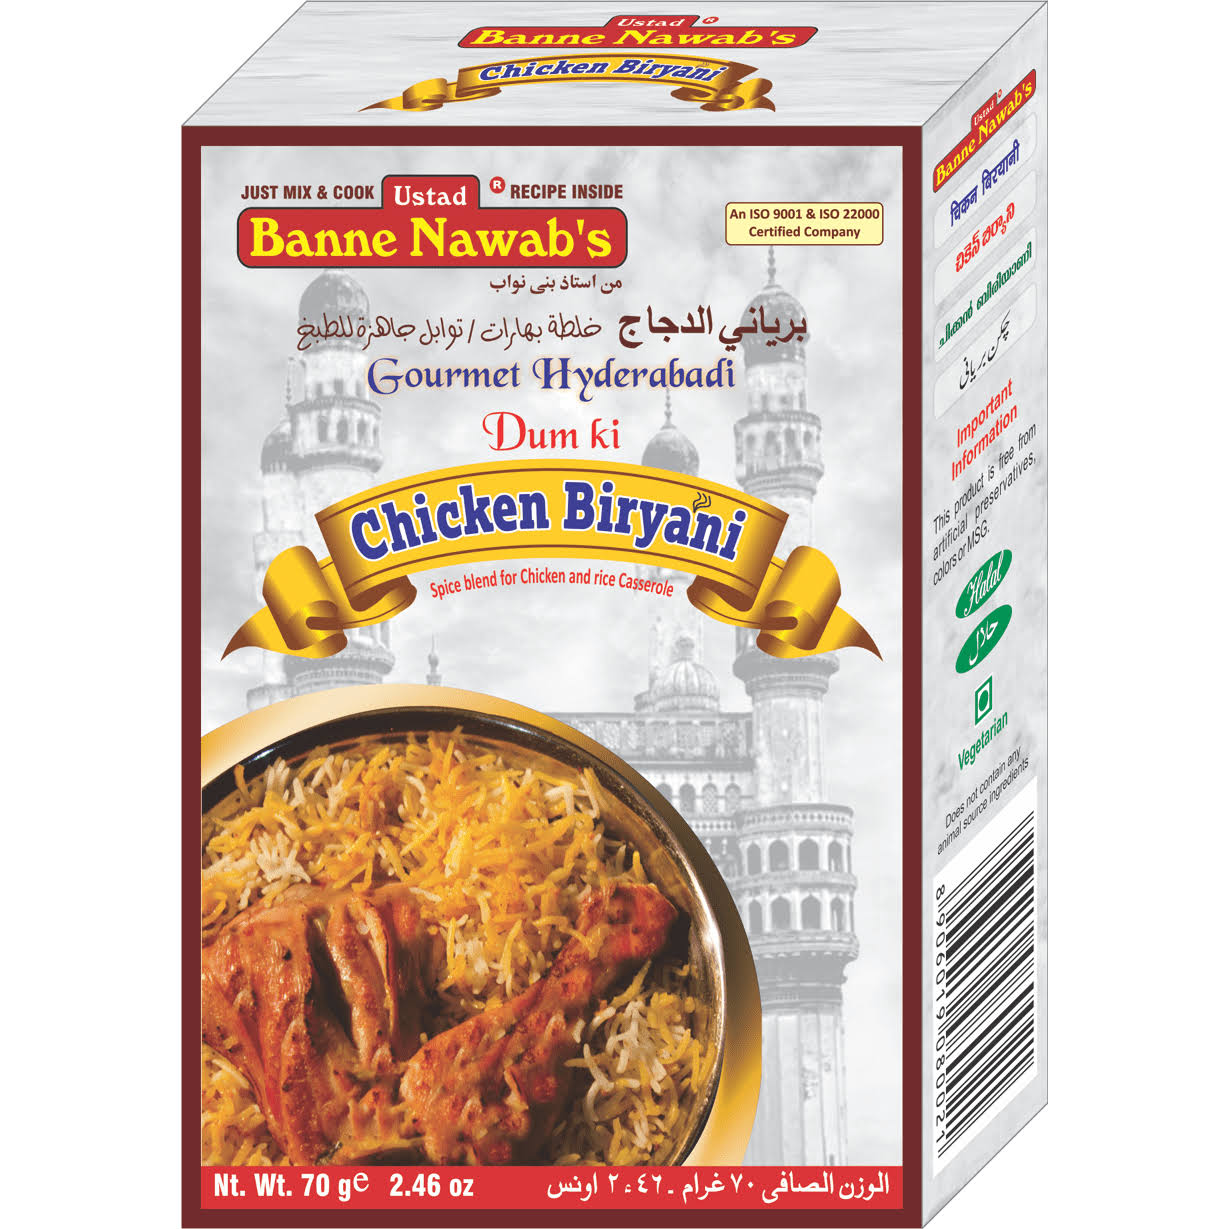 Banne Nawab's Spice Blends Ready Mix for Chicken Biryani - 70g